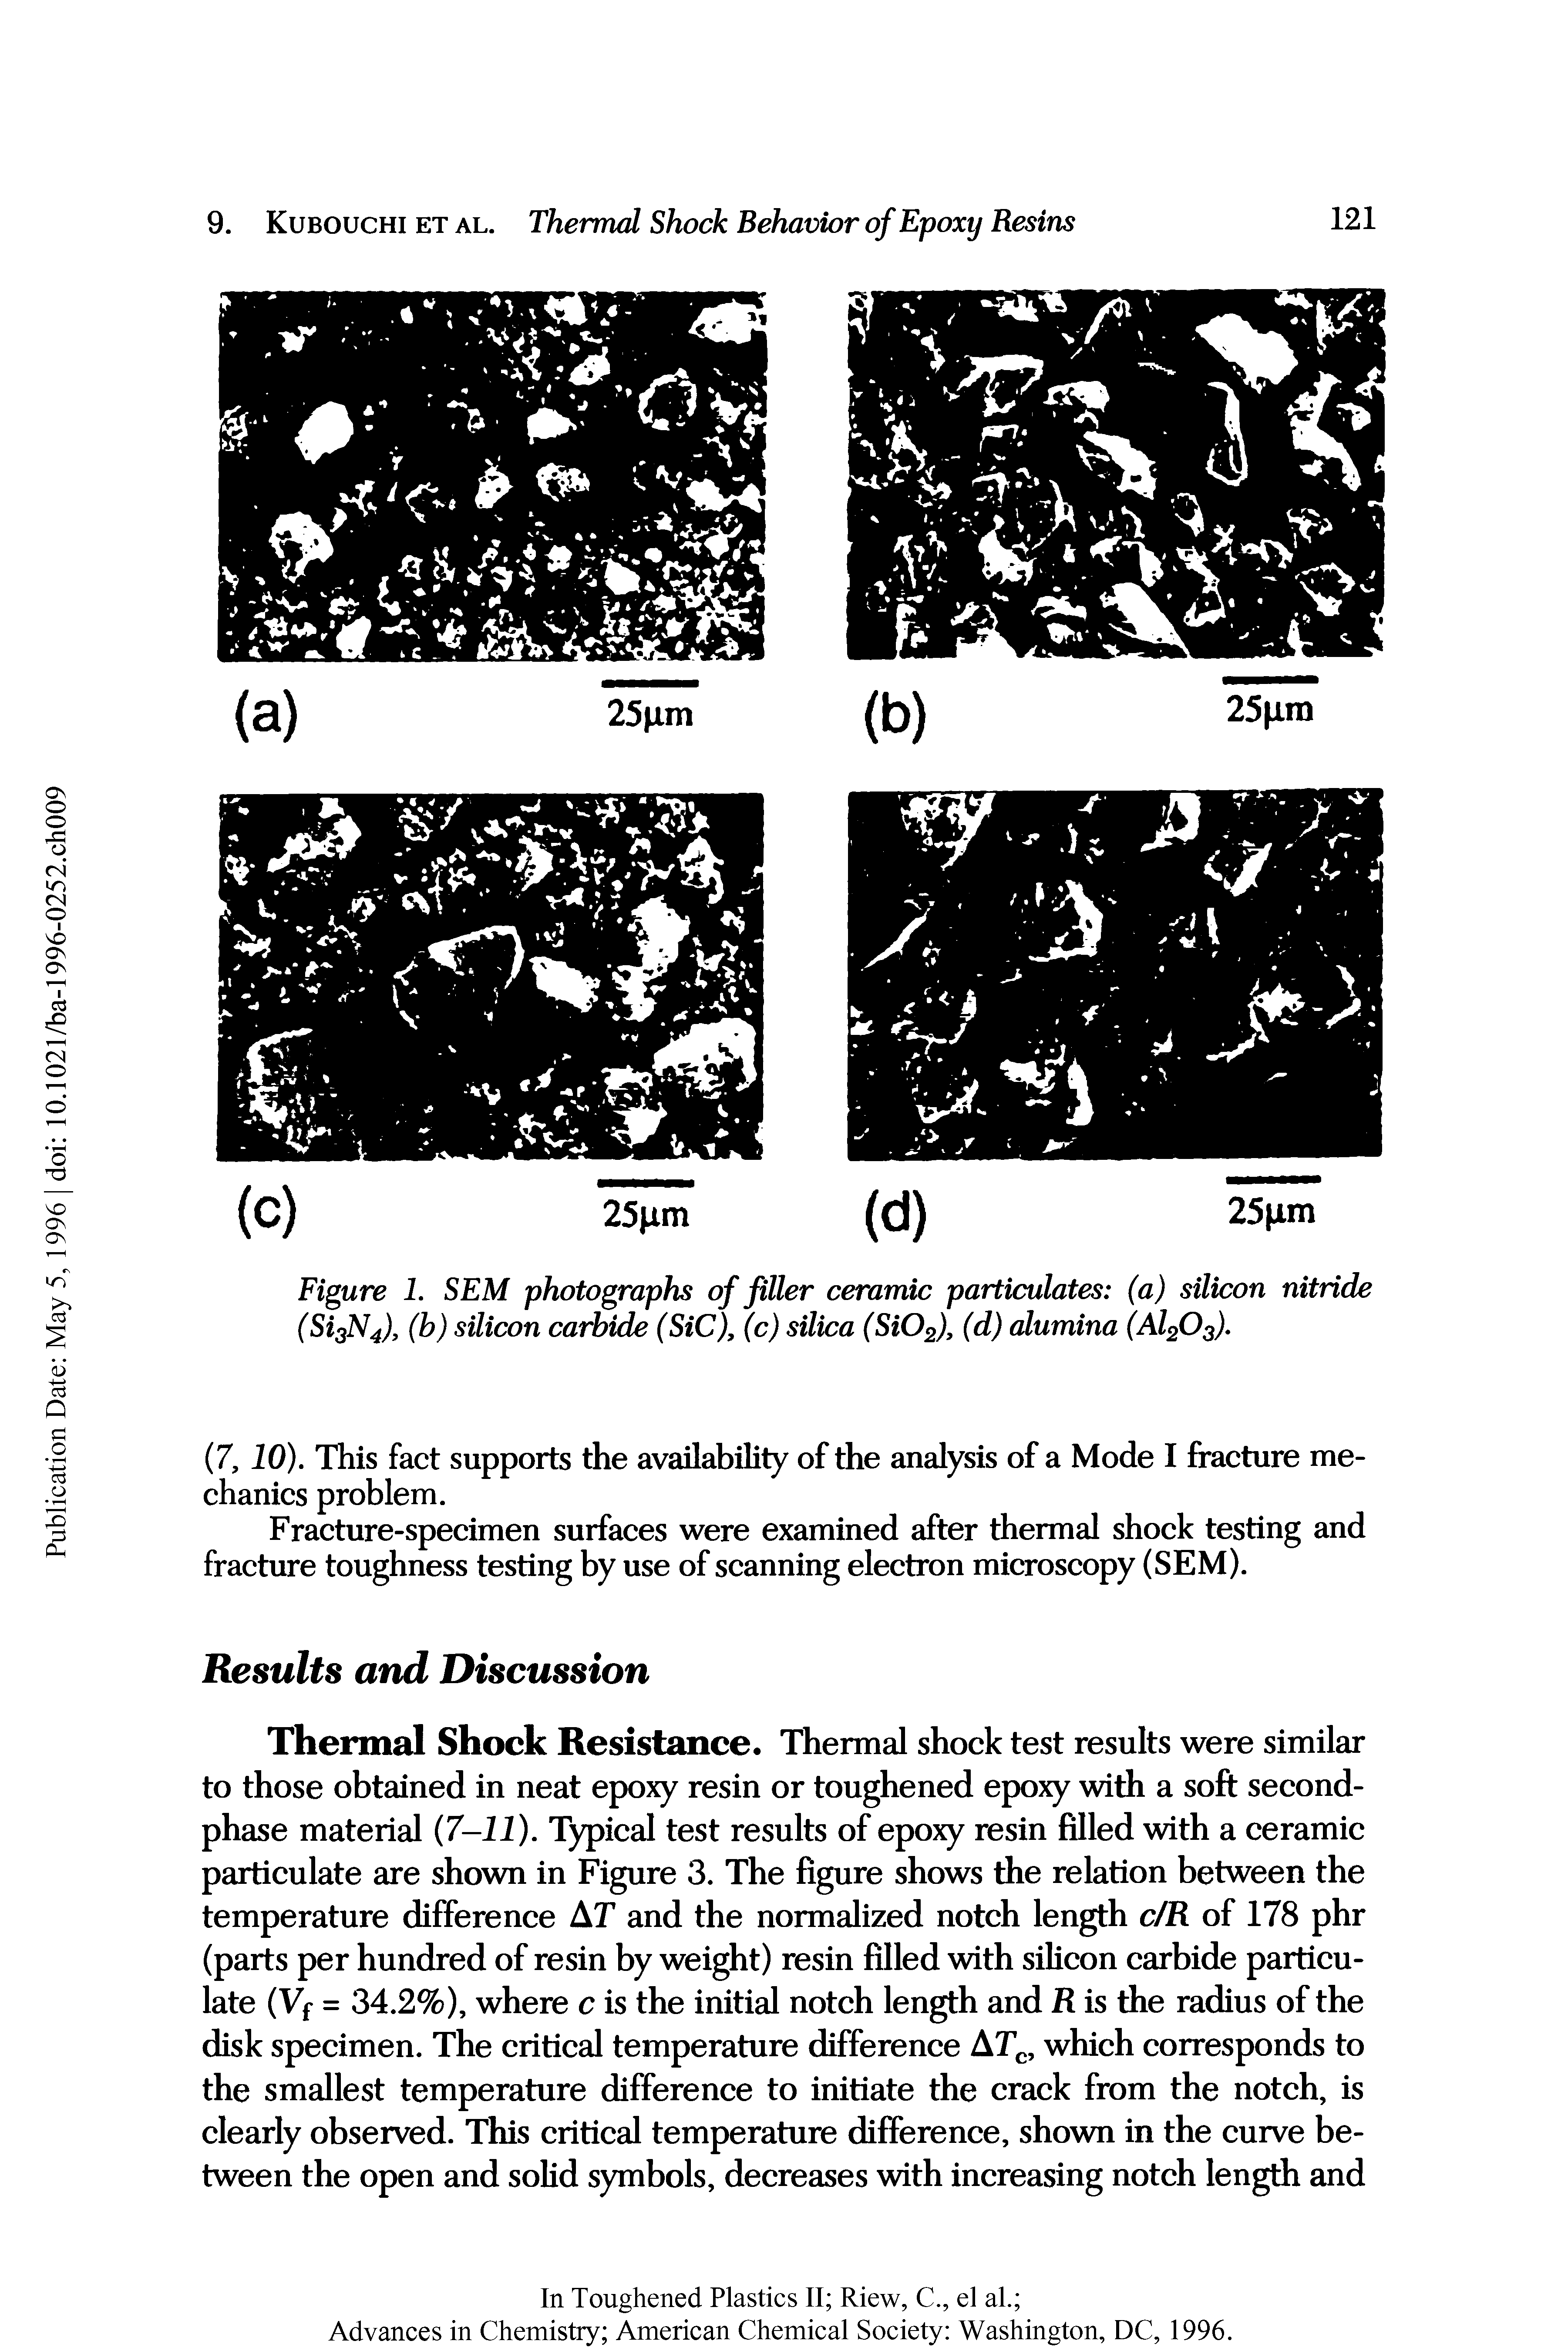 Figure 1. SEM photographs of filler ceramic particulates (a) silicon nitride (Si3N4), (b) silicon carbide (SiC), (c) silica (Si02), (d) alumina (Al203).